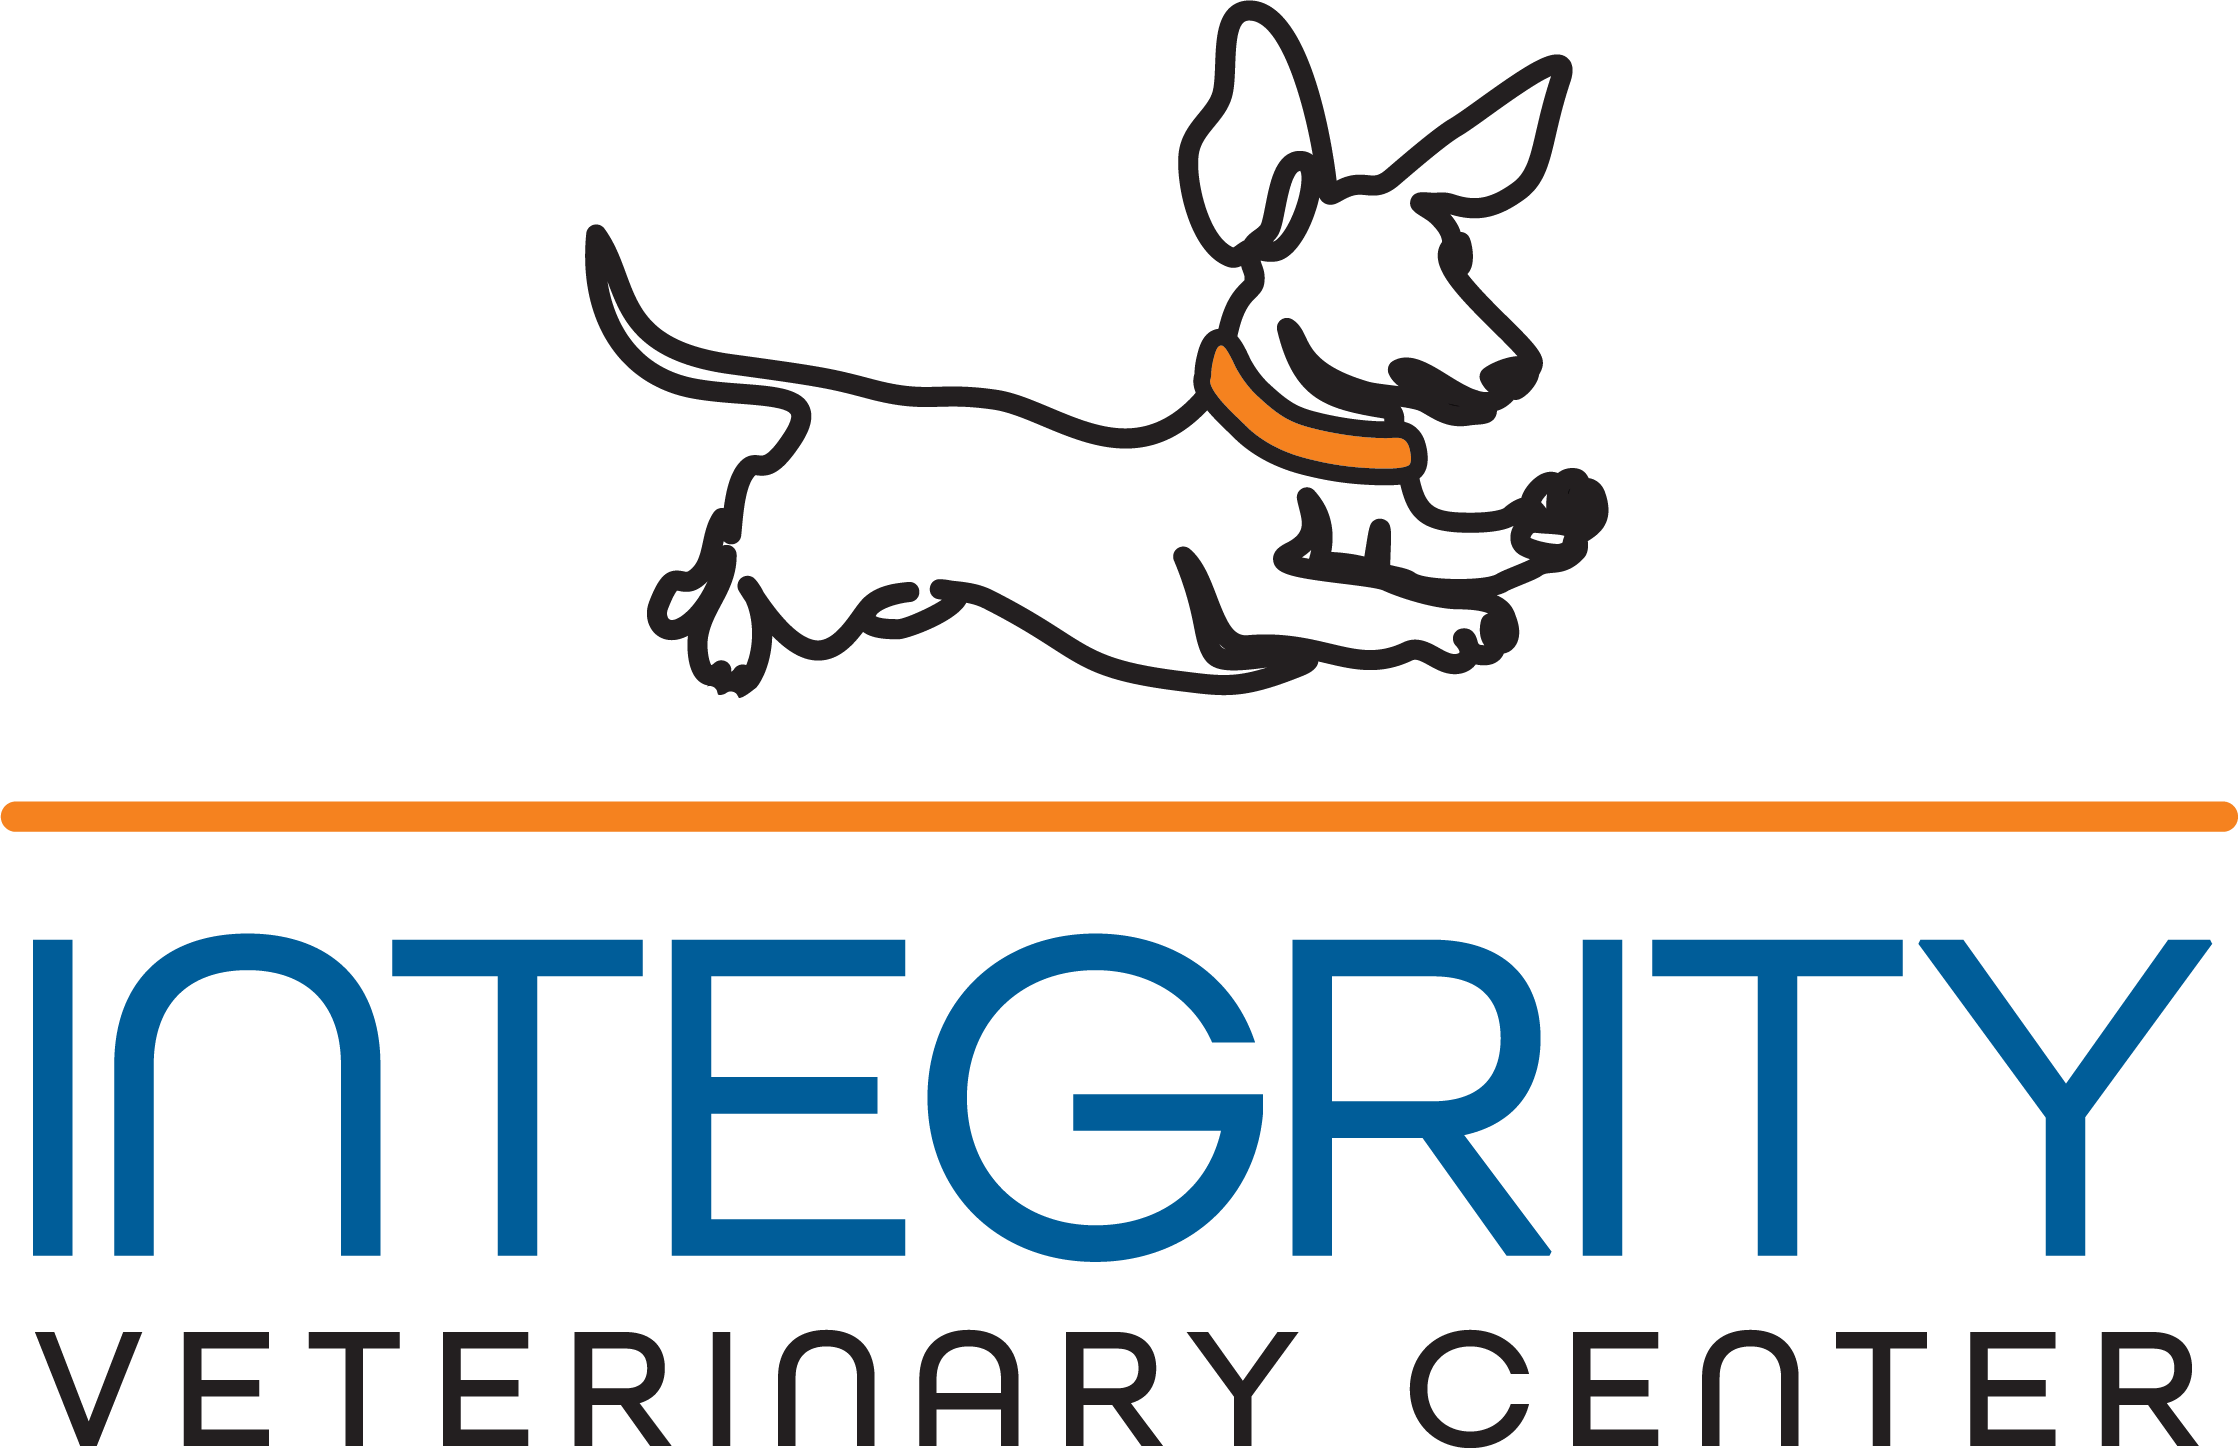 Integrity Veterinary Center